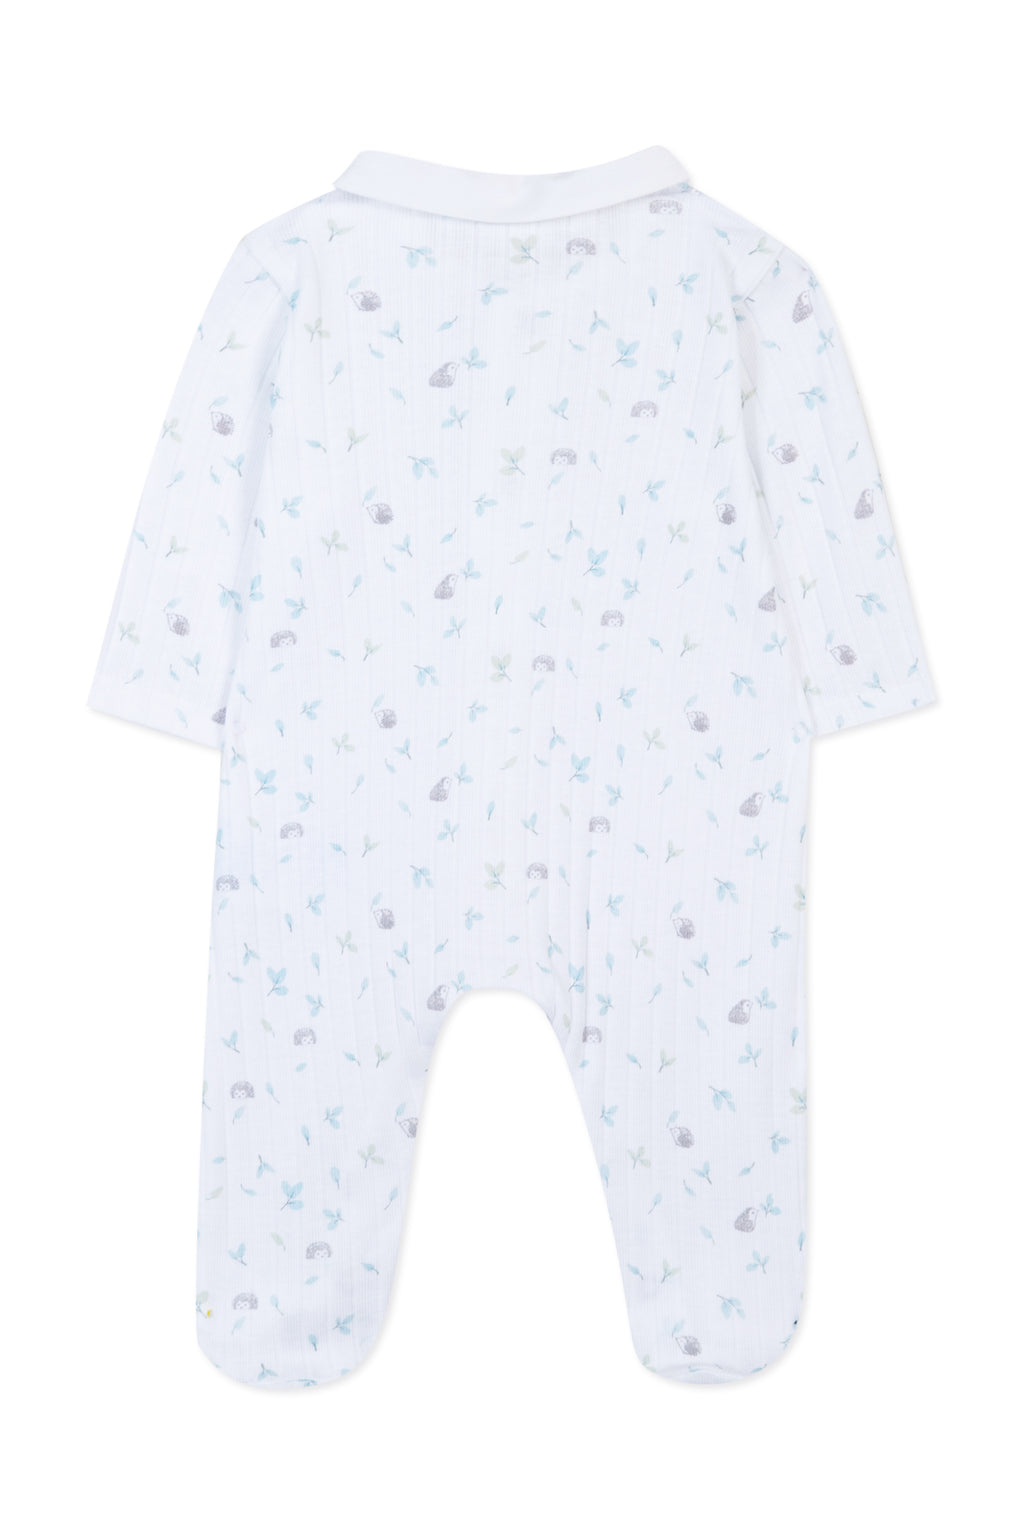 Pijama - Blanco feuillage erizos